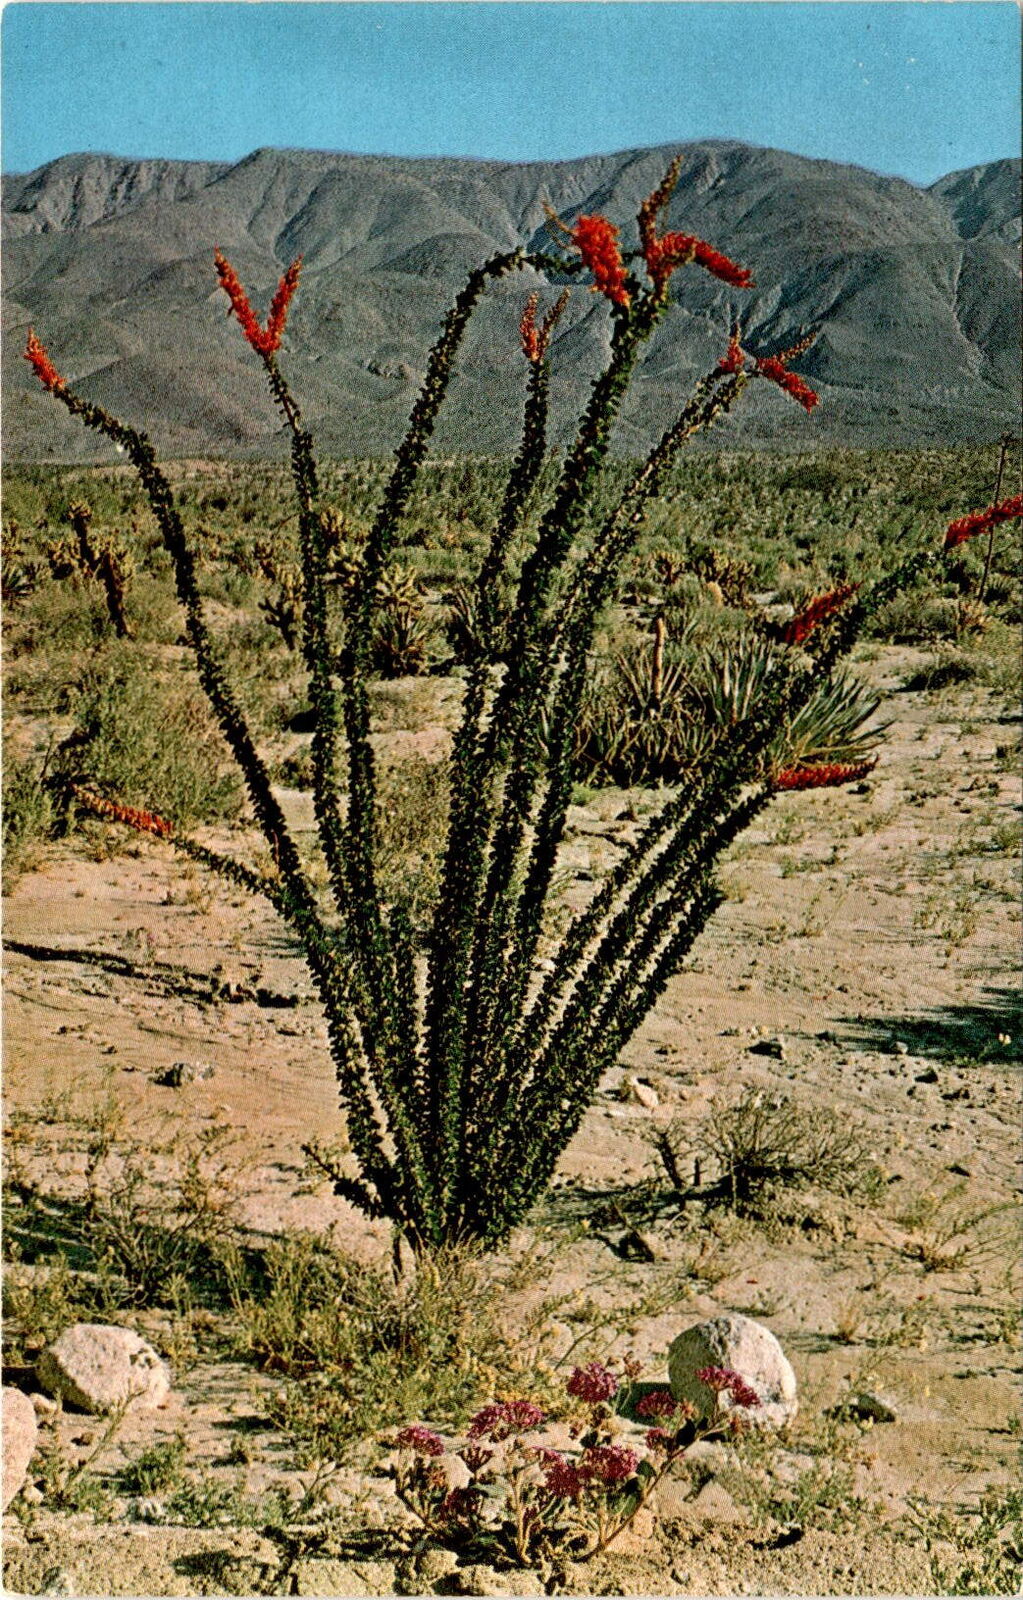 Ocotillo plant, desert, scarlet flowers, thorny stems, buggy whip, Postcard